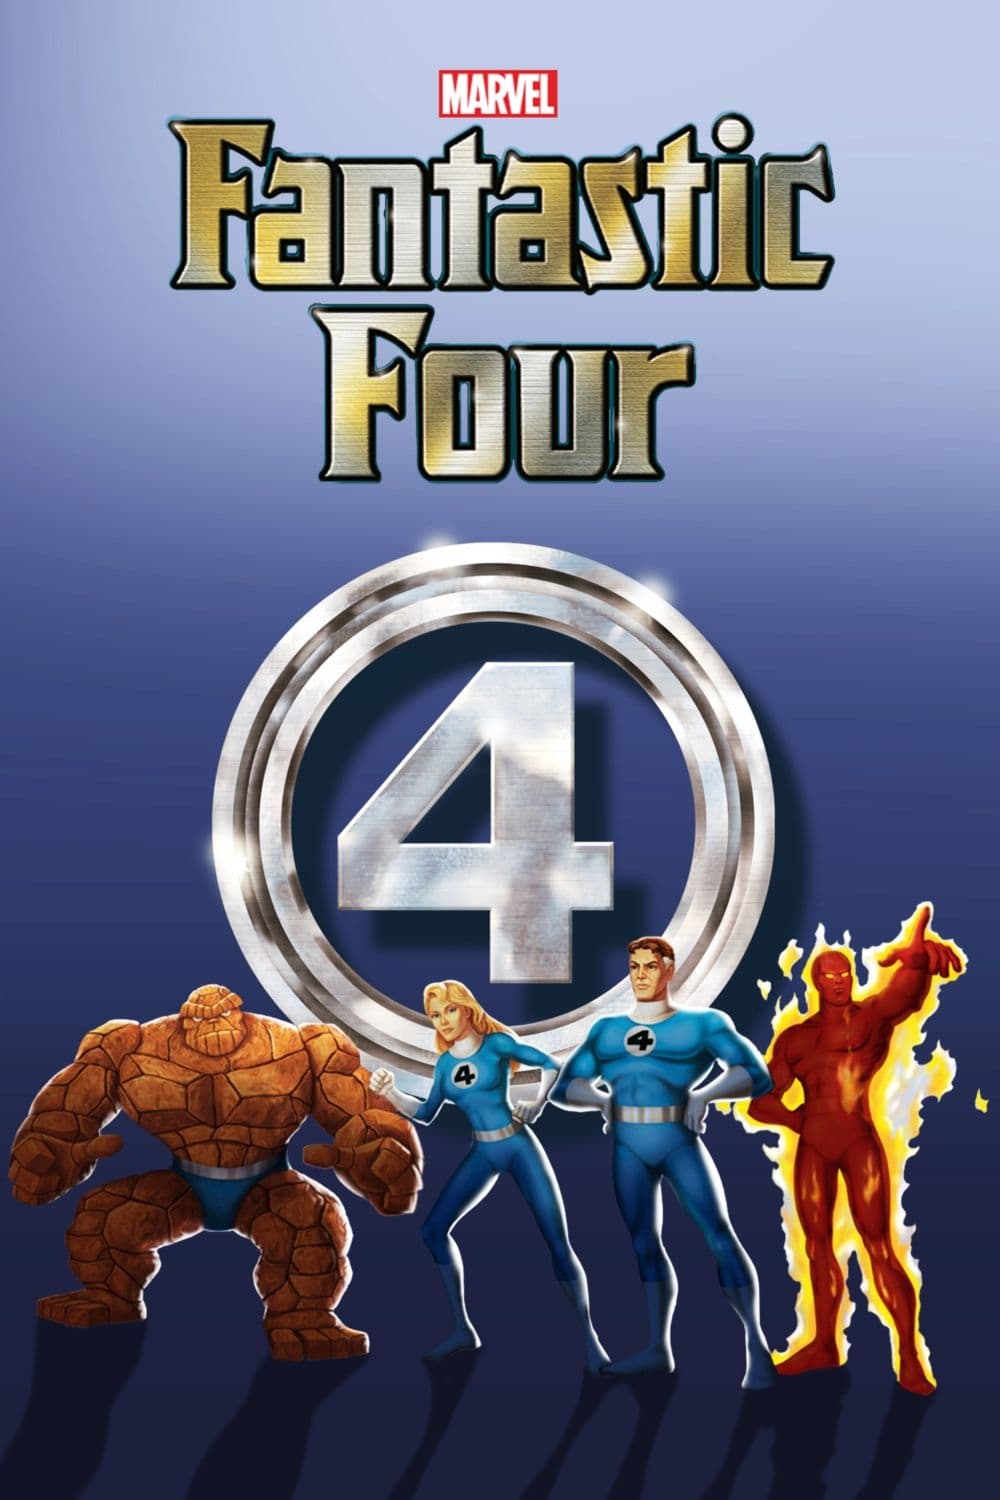 Fantastic Four (1994)